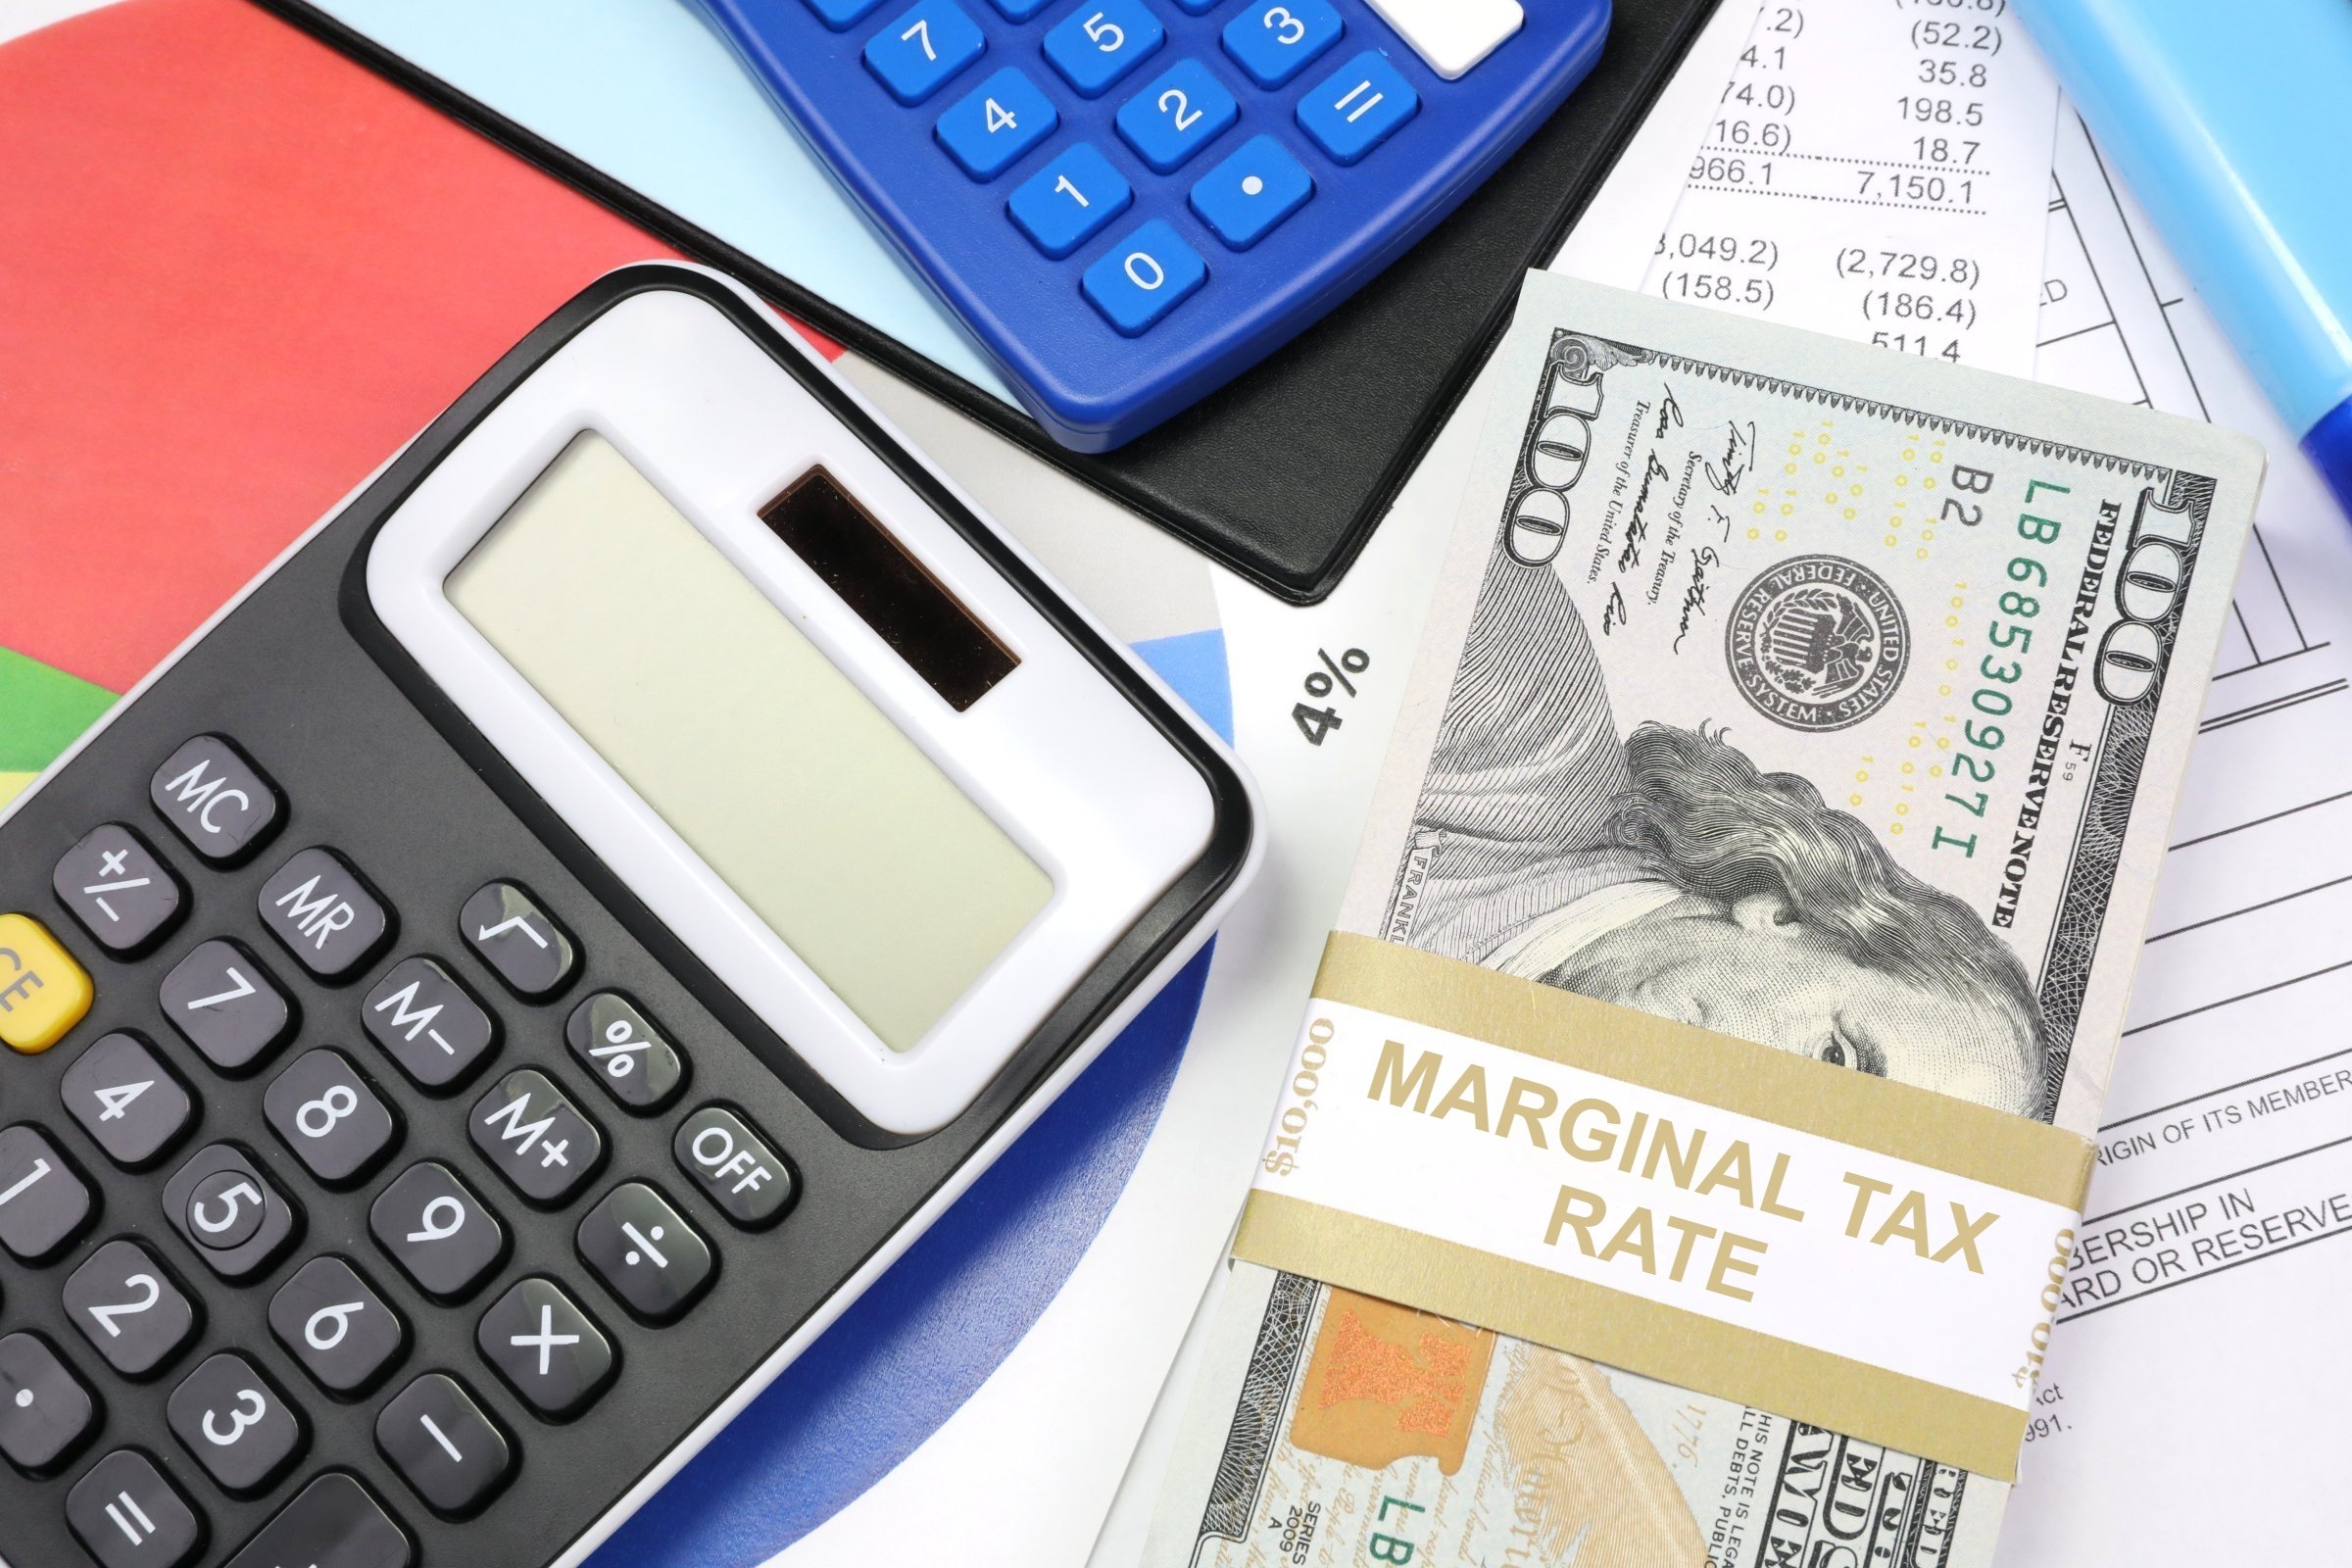 Marginal Tax Rate